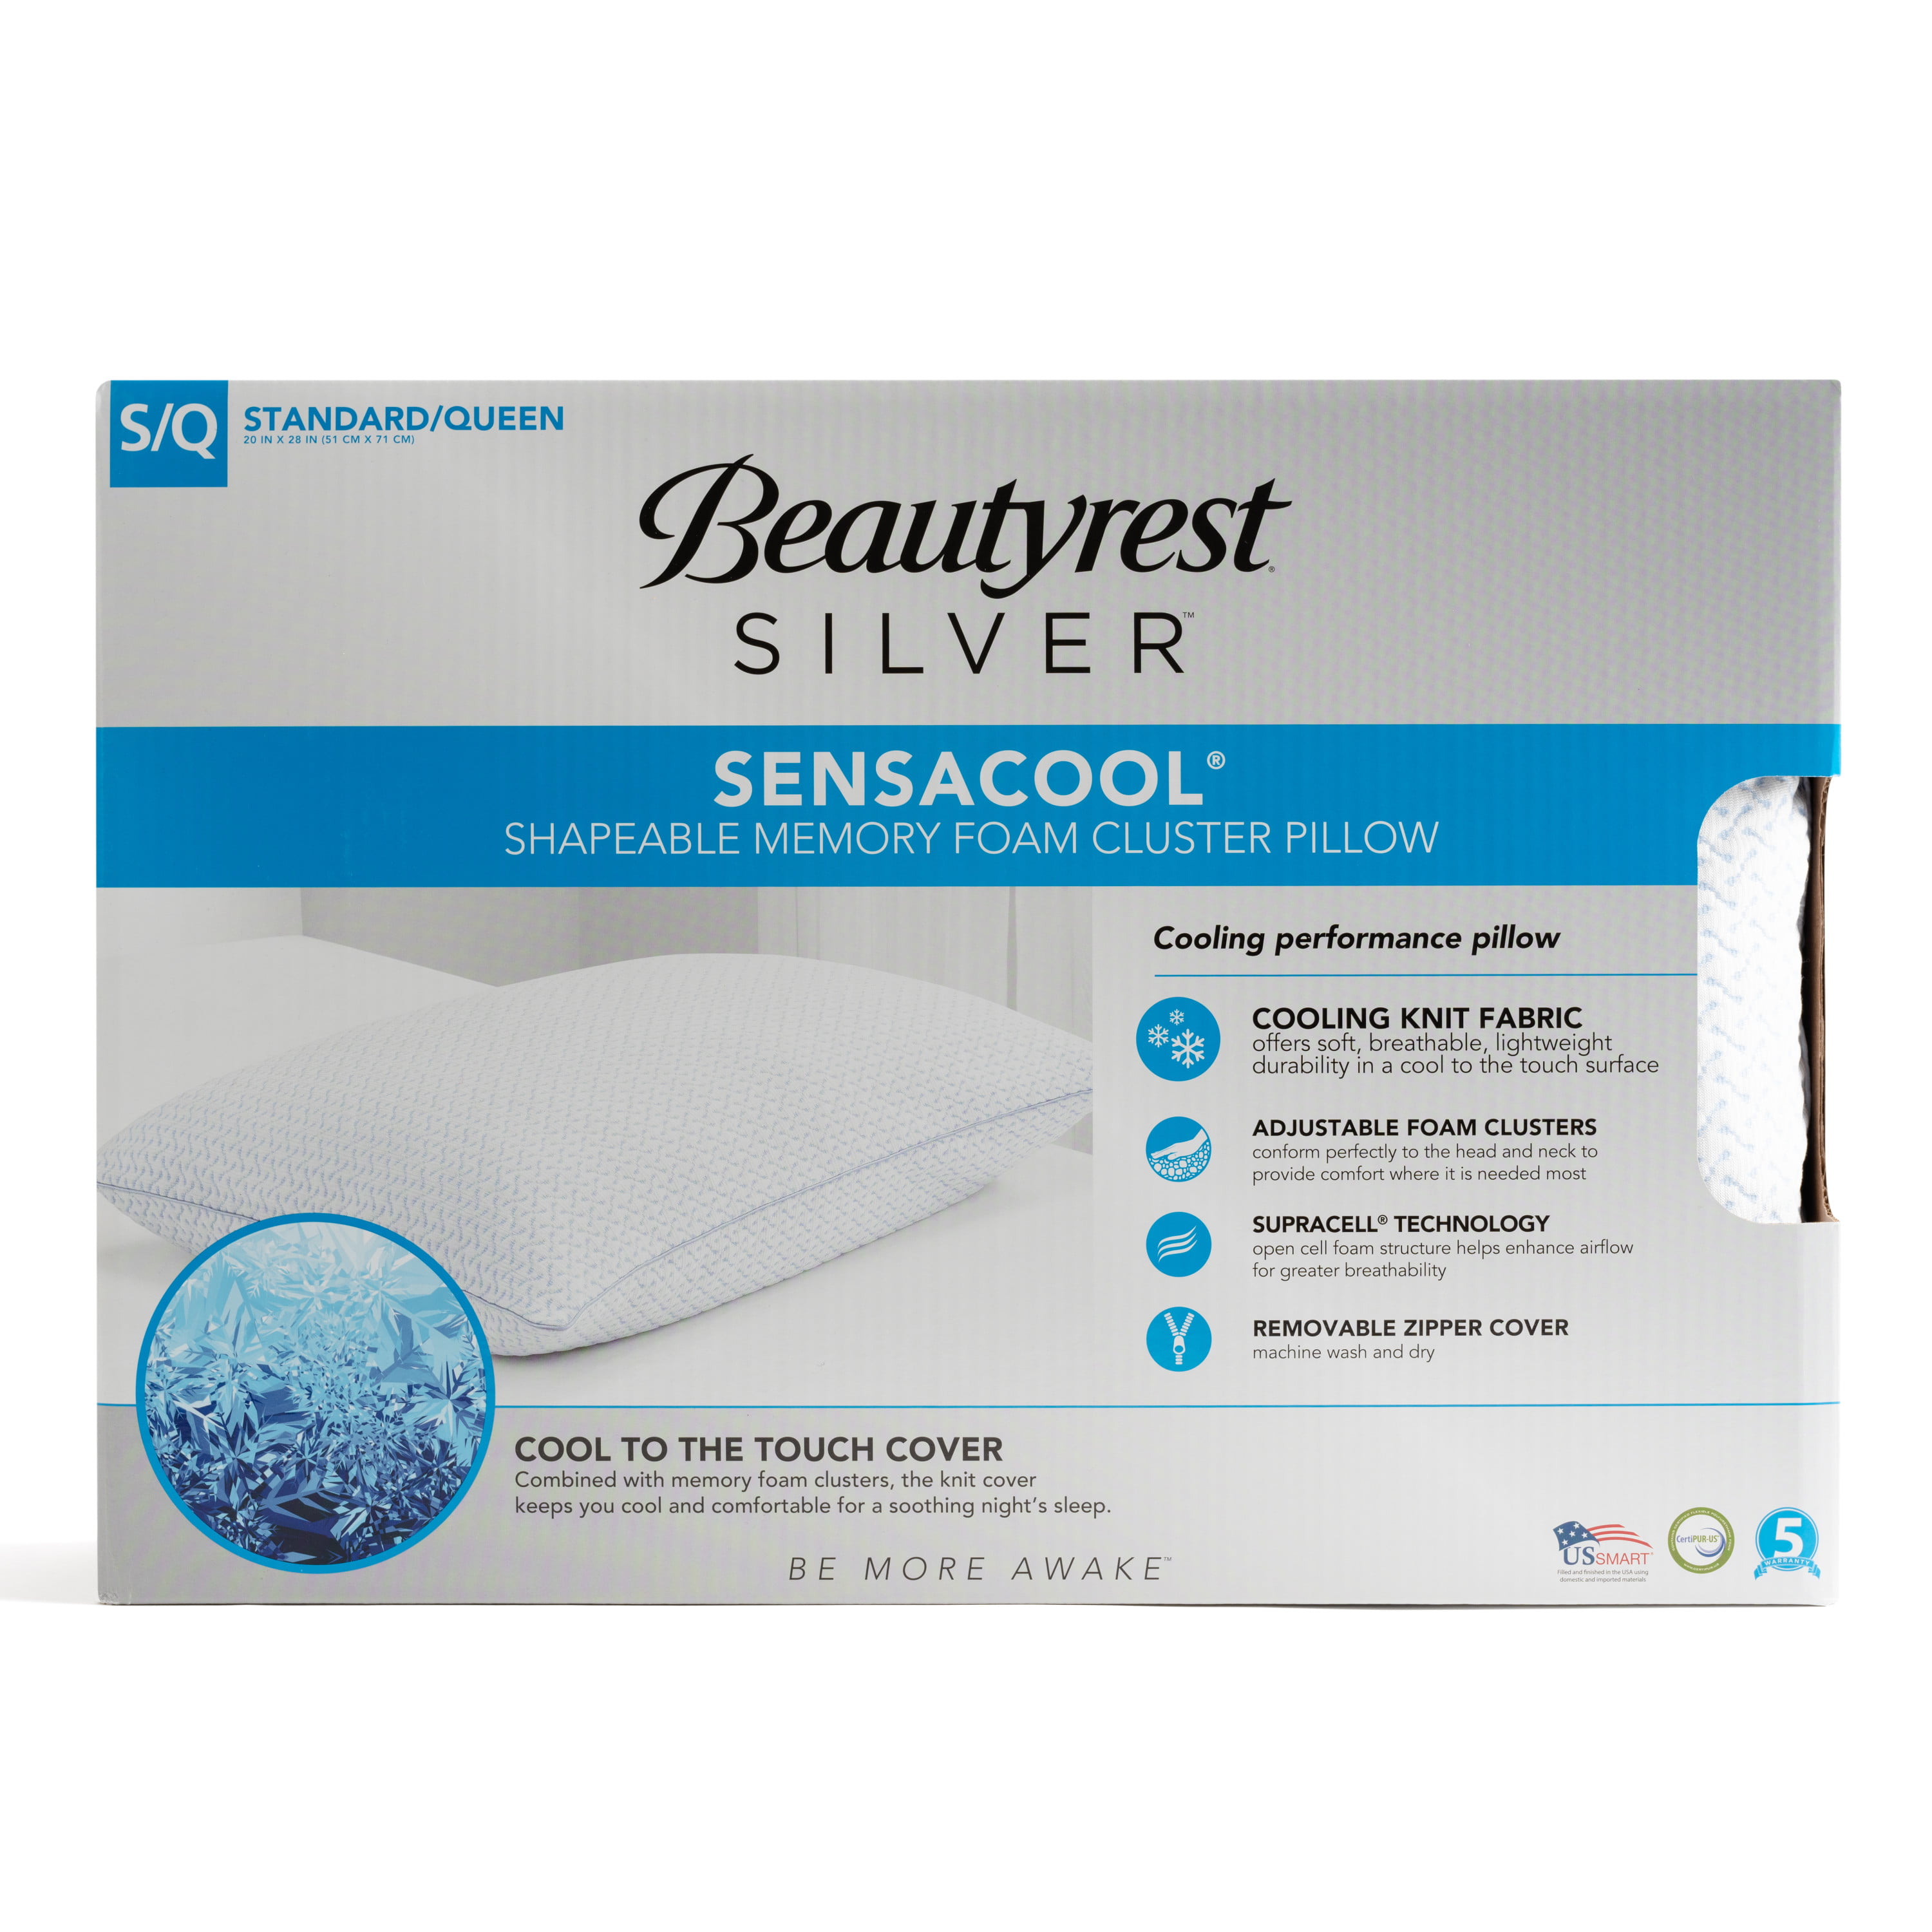 Beautyrest Silver SENSACOOL Shapeable 